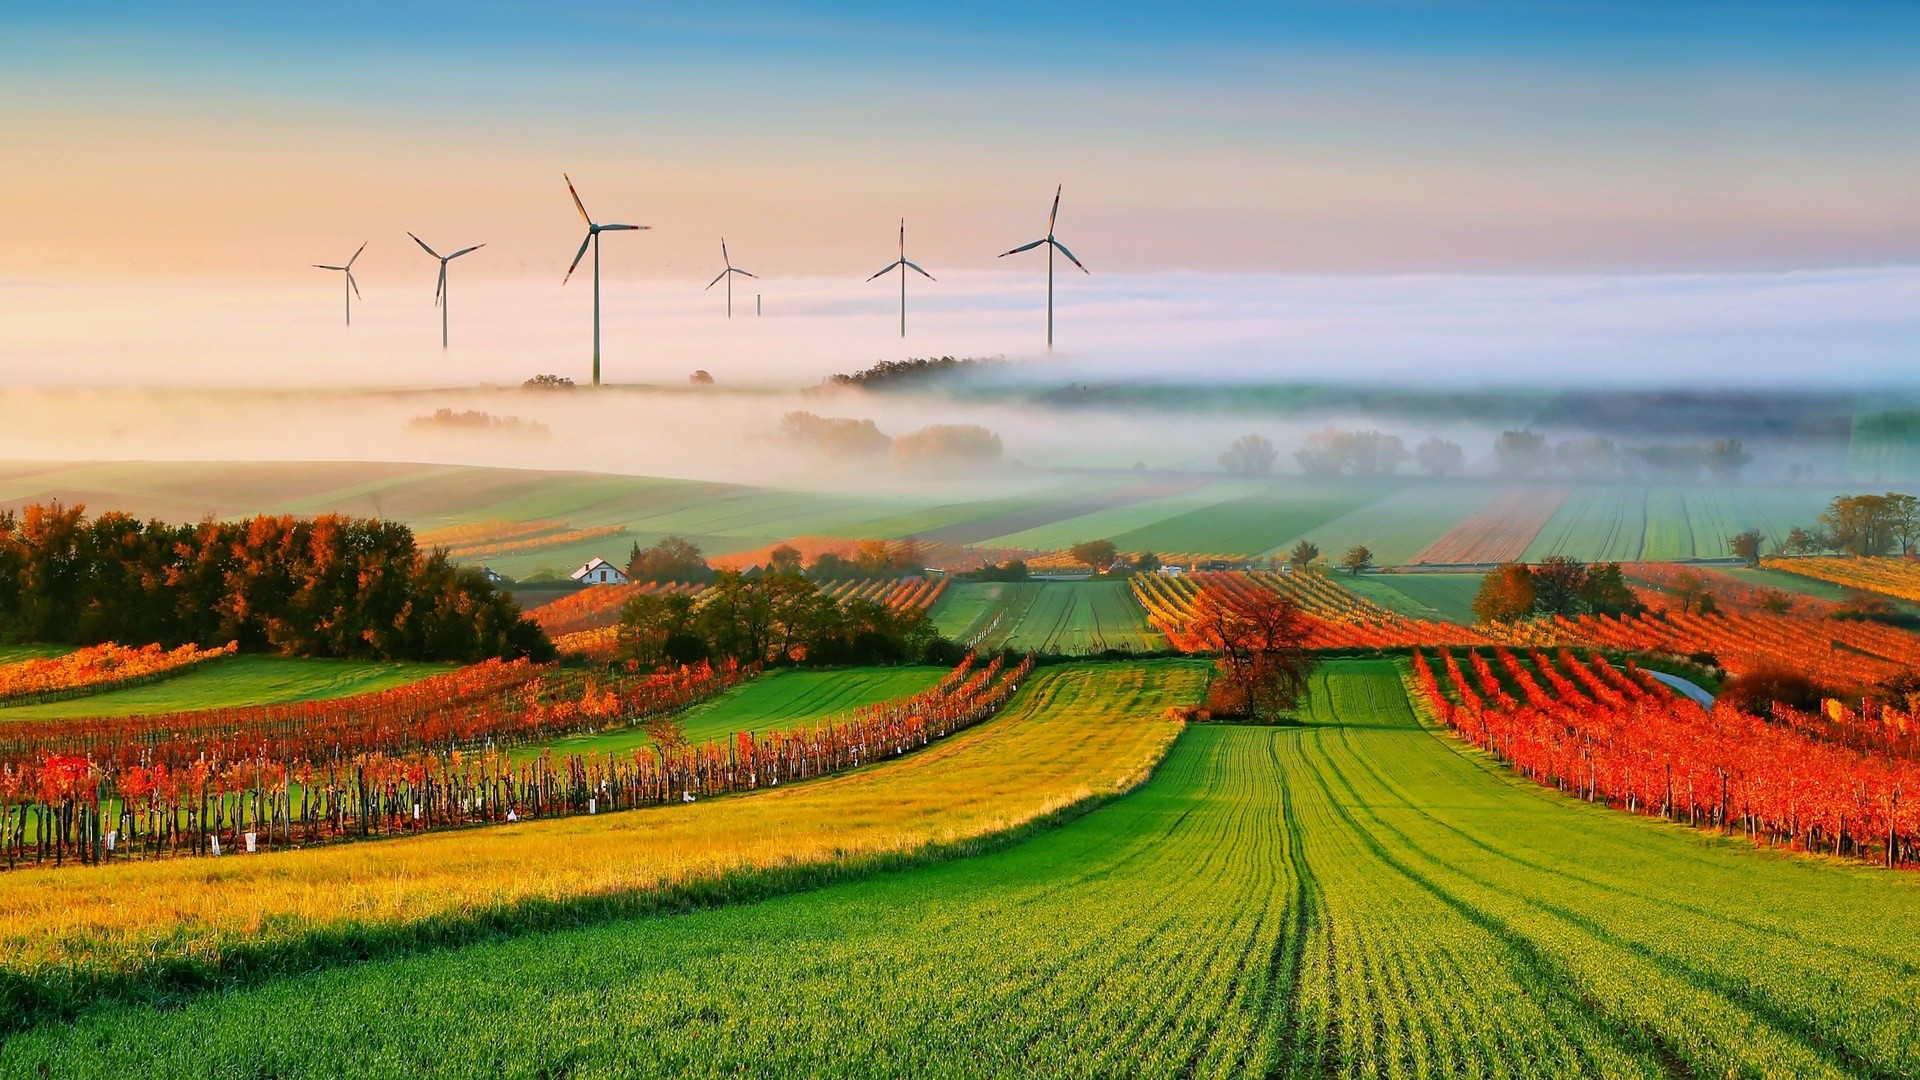 General 1920x1080 landscape trees clouds field mist hills house vineyard wind turbine Agro (Plants)